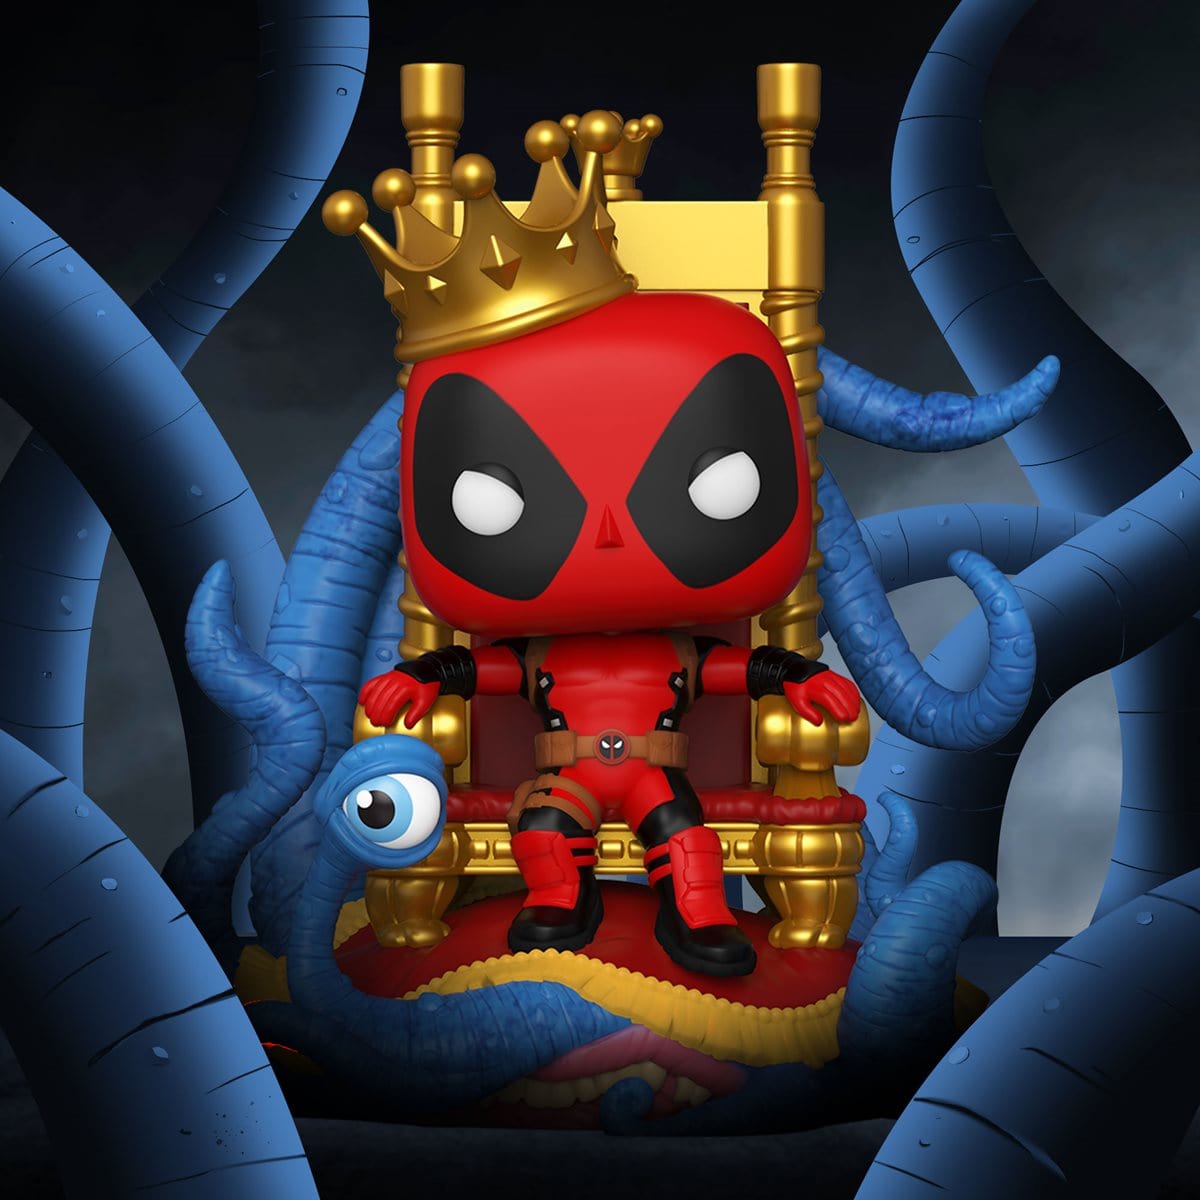 Marvel Heroes King Deadpool on Throne Deluxe Pop! Vinyl Figure - Previews Exclusive 